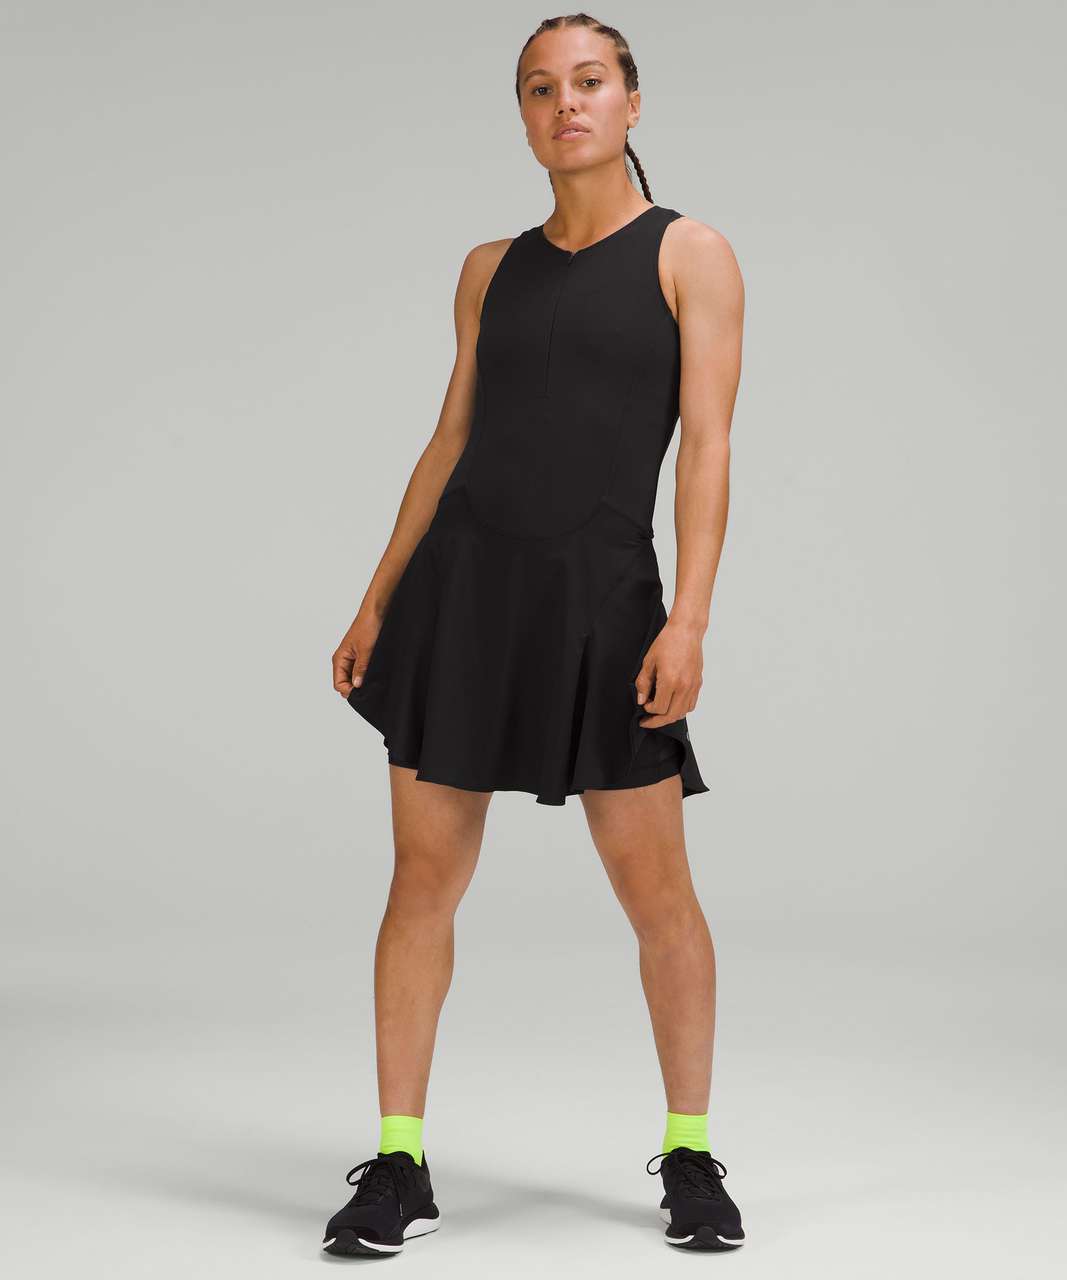 Athleta Ace Tennis Dress in Black